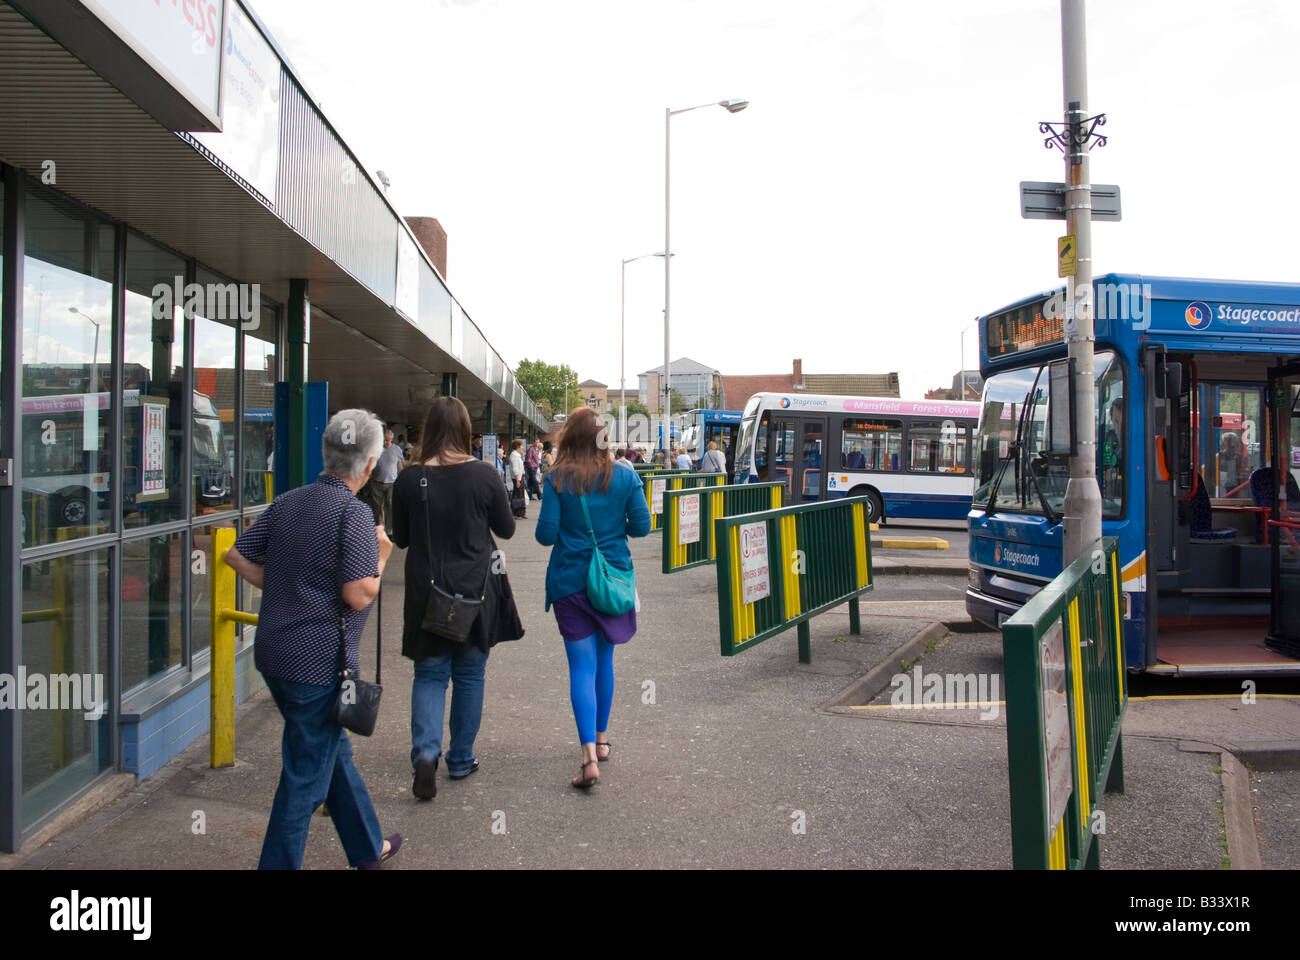 Bus station, Rosemary street, Mansfield, Notts Stock Photo - Alamy